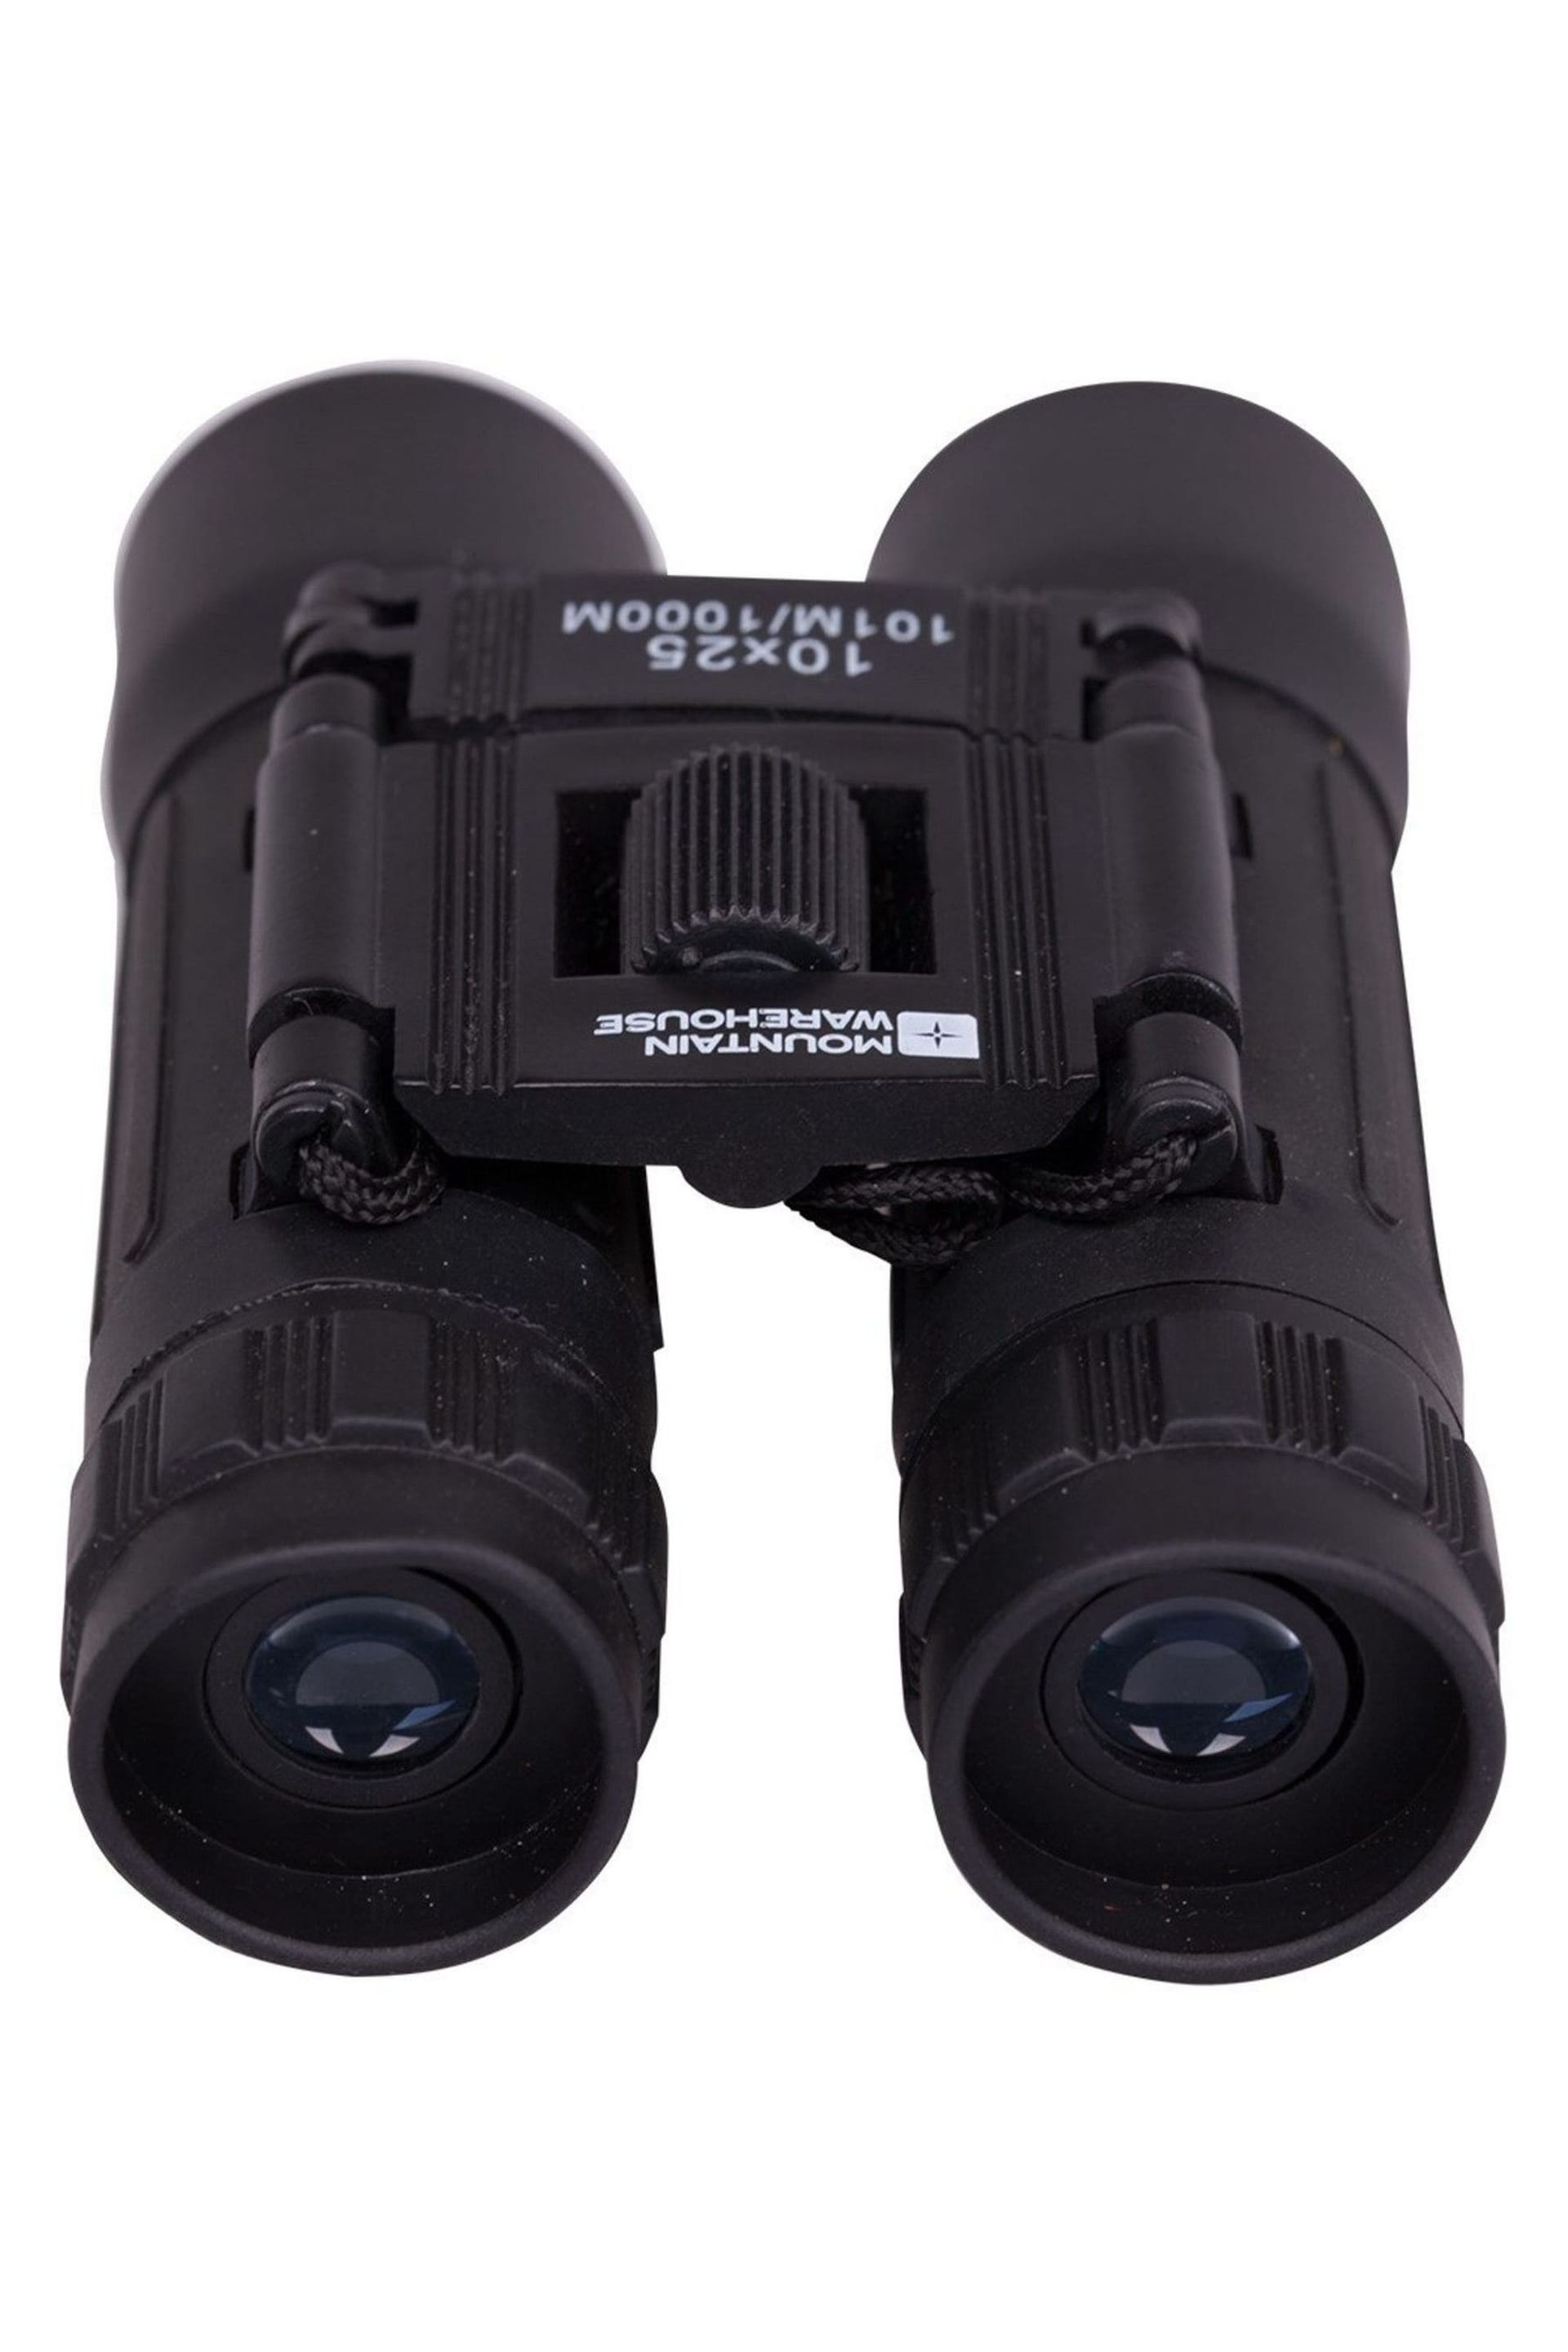 Mountain Warehouse Black Binoculars - 10 x 25mm - Image 1 of 1